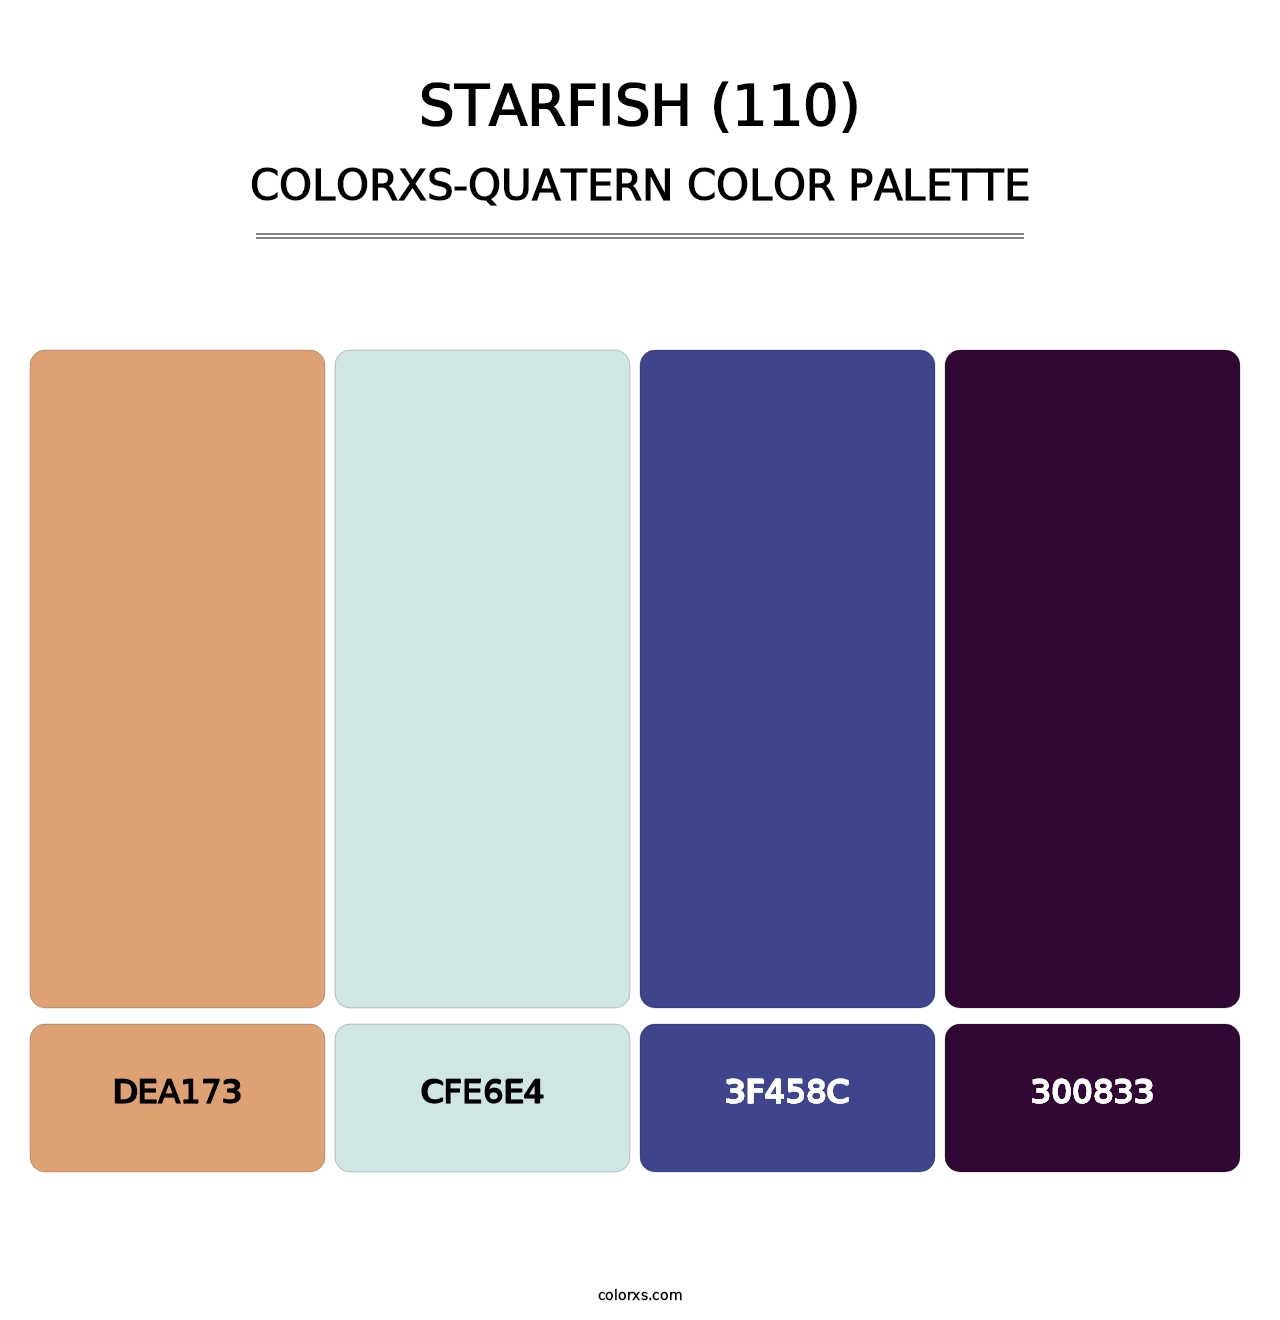 Starfish (110) - Colorxs Quatern Palette